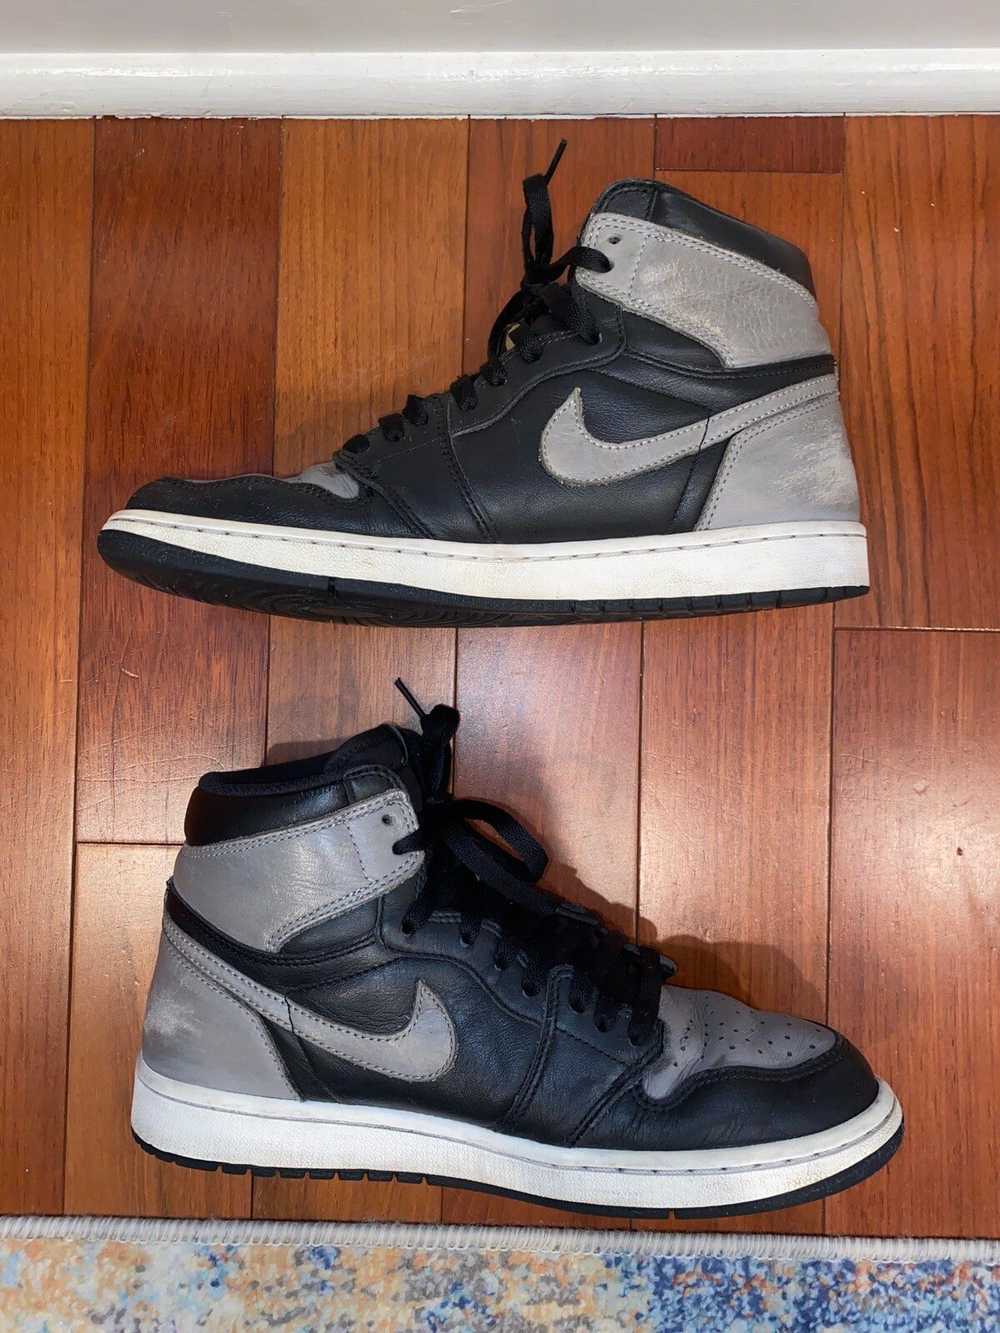 Jordan Brand × Nike 2018 Jordan 1 “Shadow” - image 3